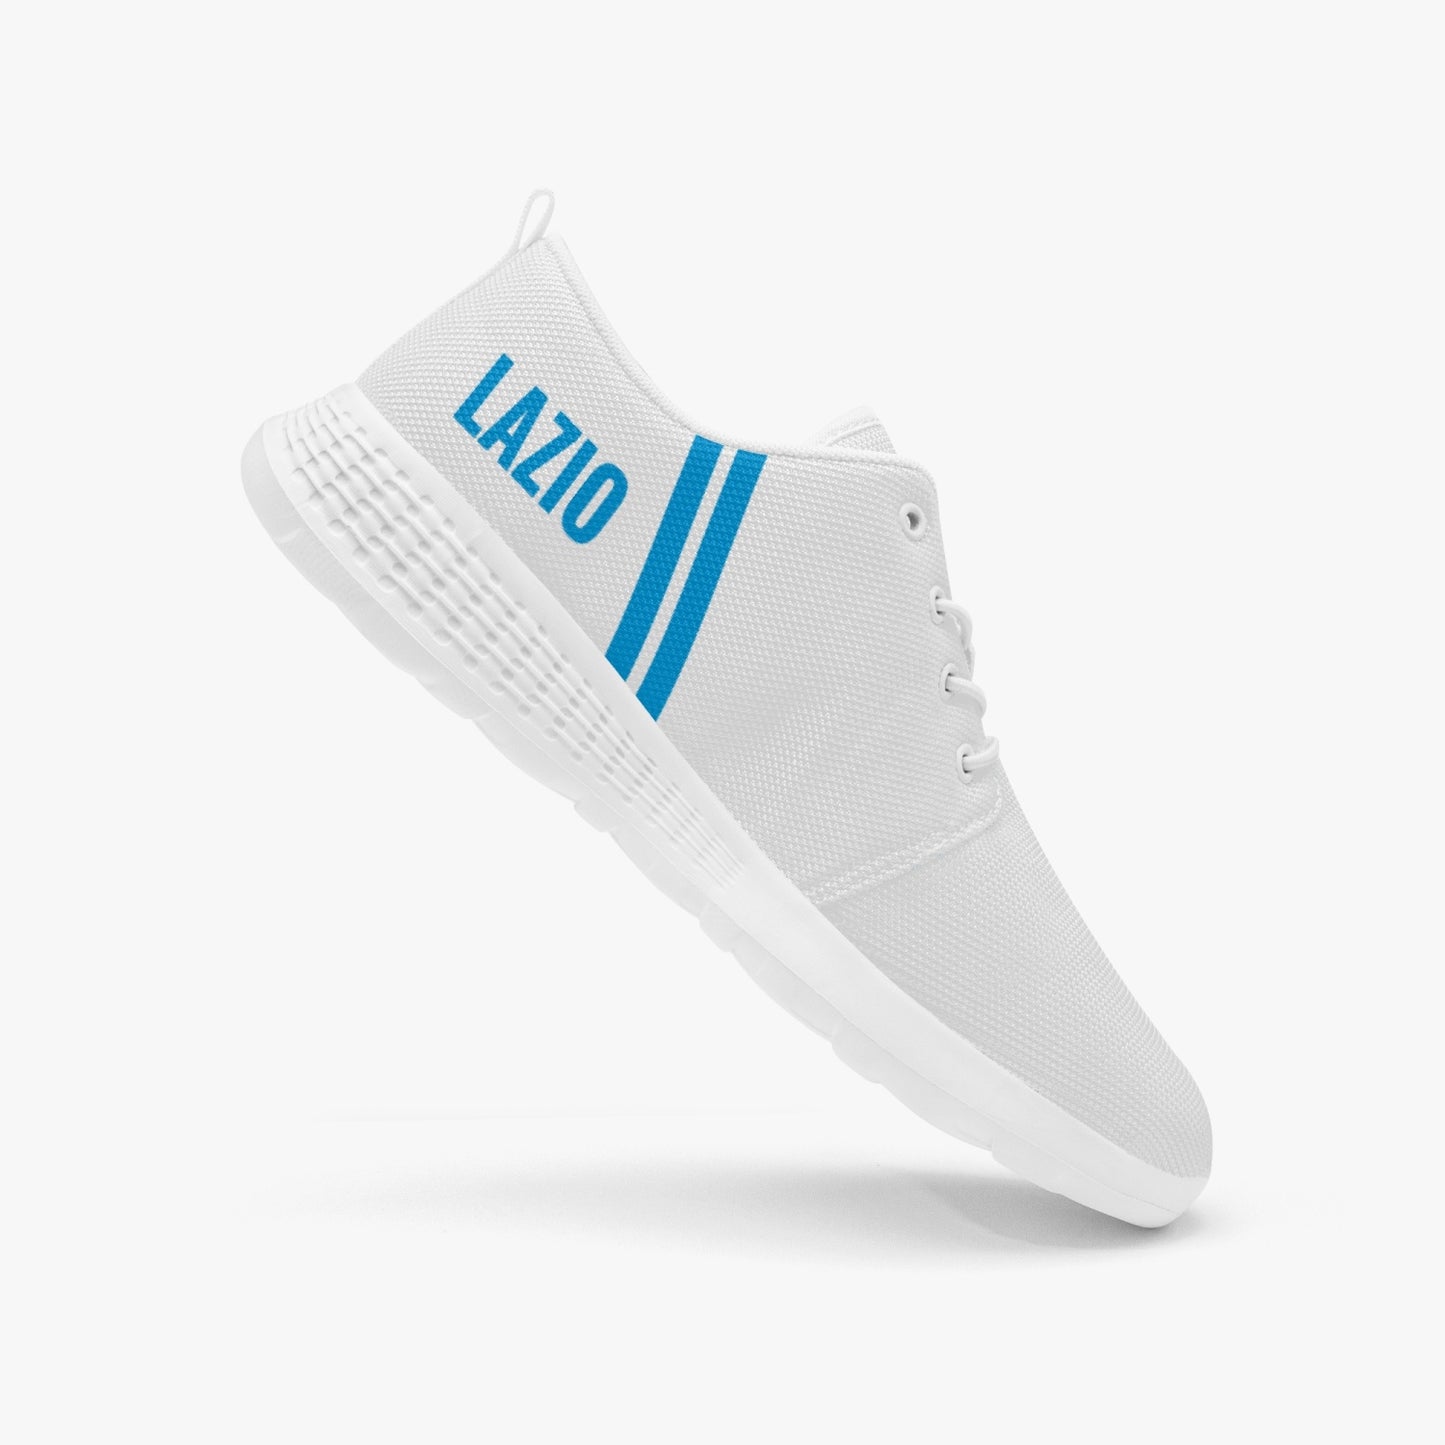 Lazio Running Shoes - men's /women's sizes